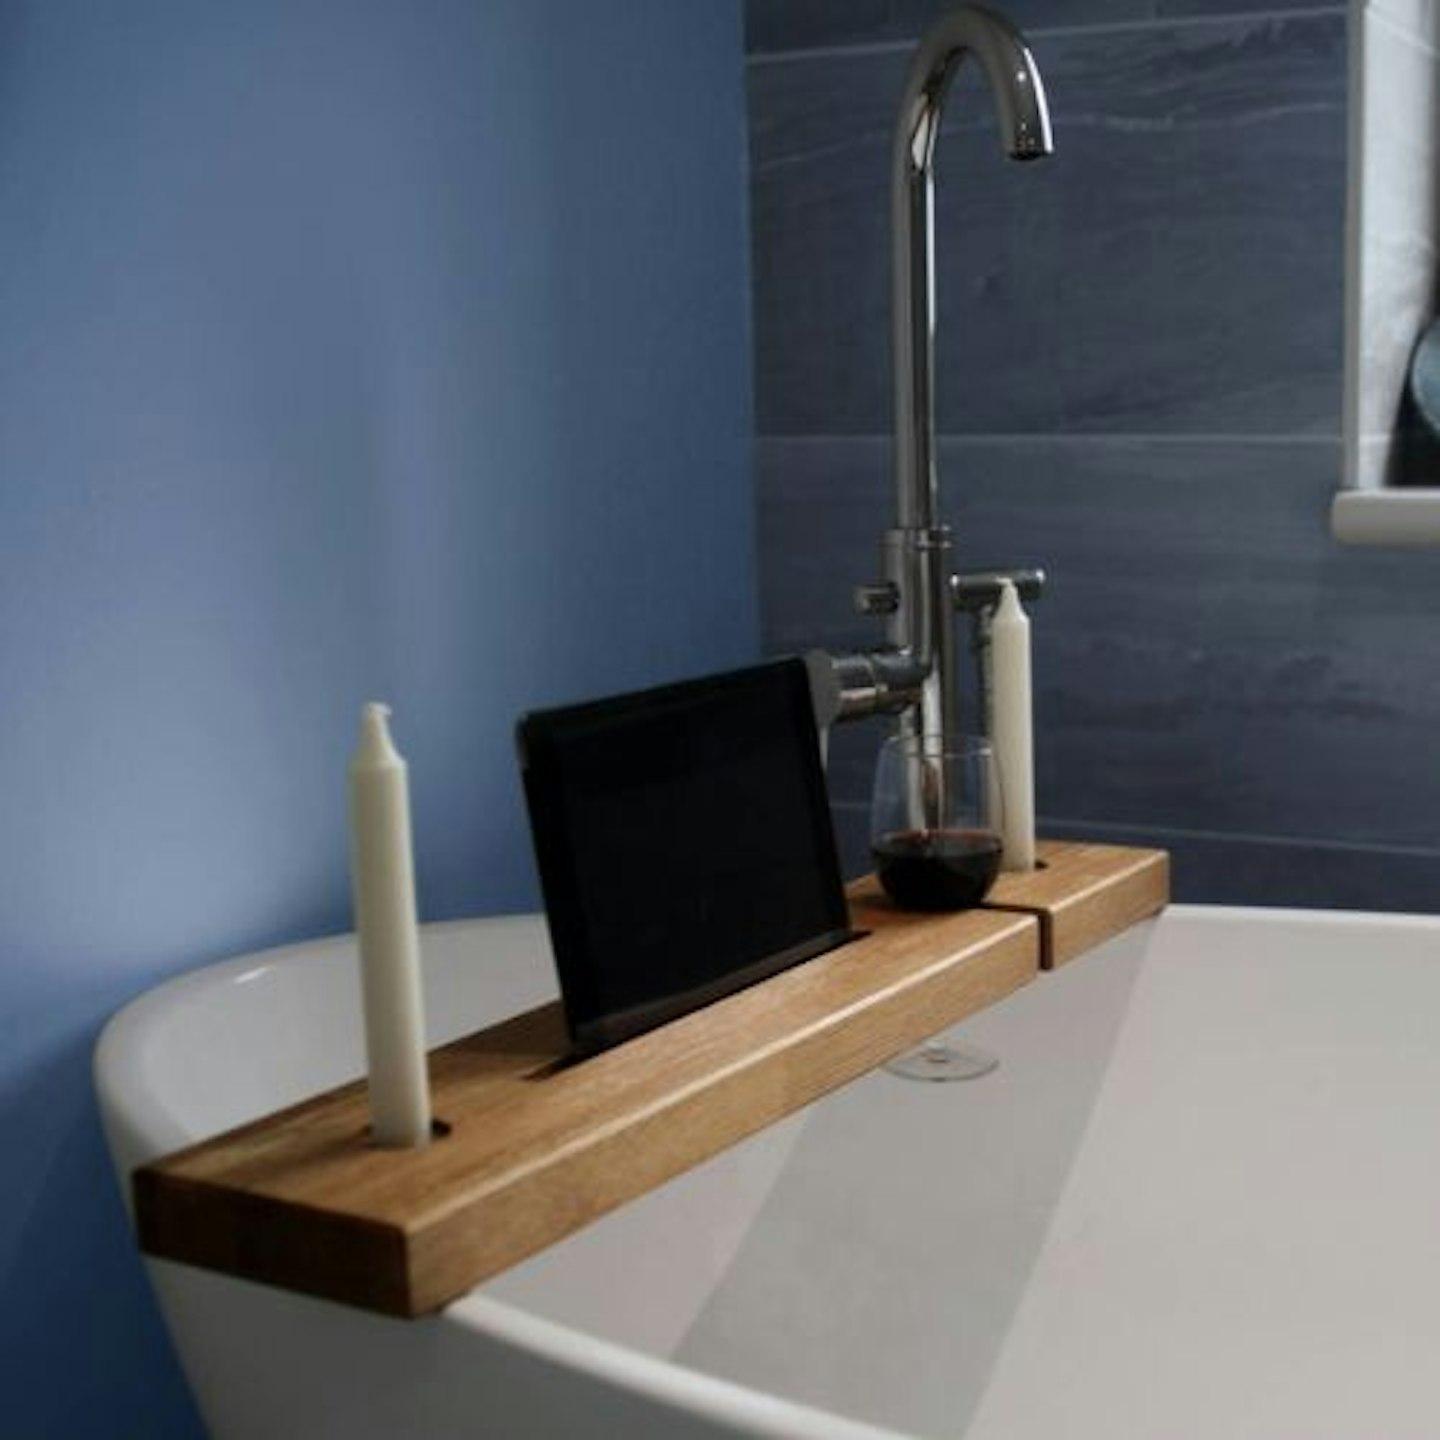 Beech Bath Caddy Or Bath Tray With iPad Stand